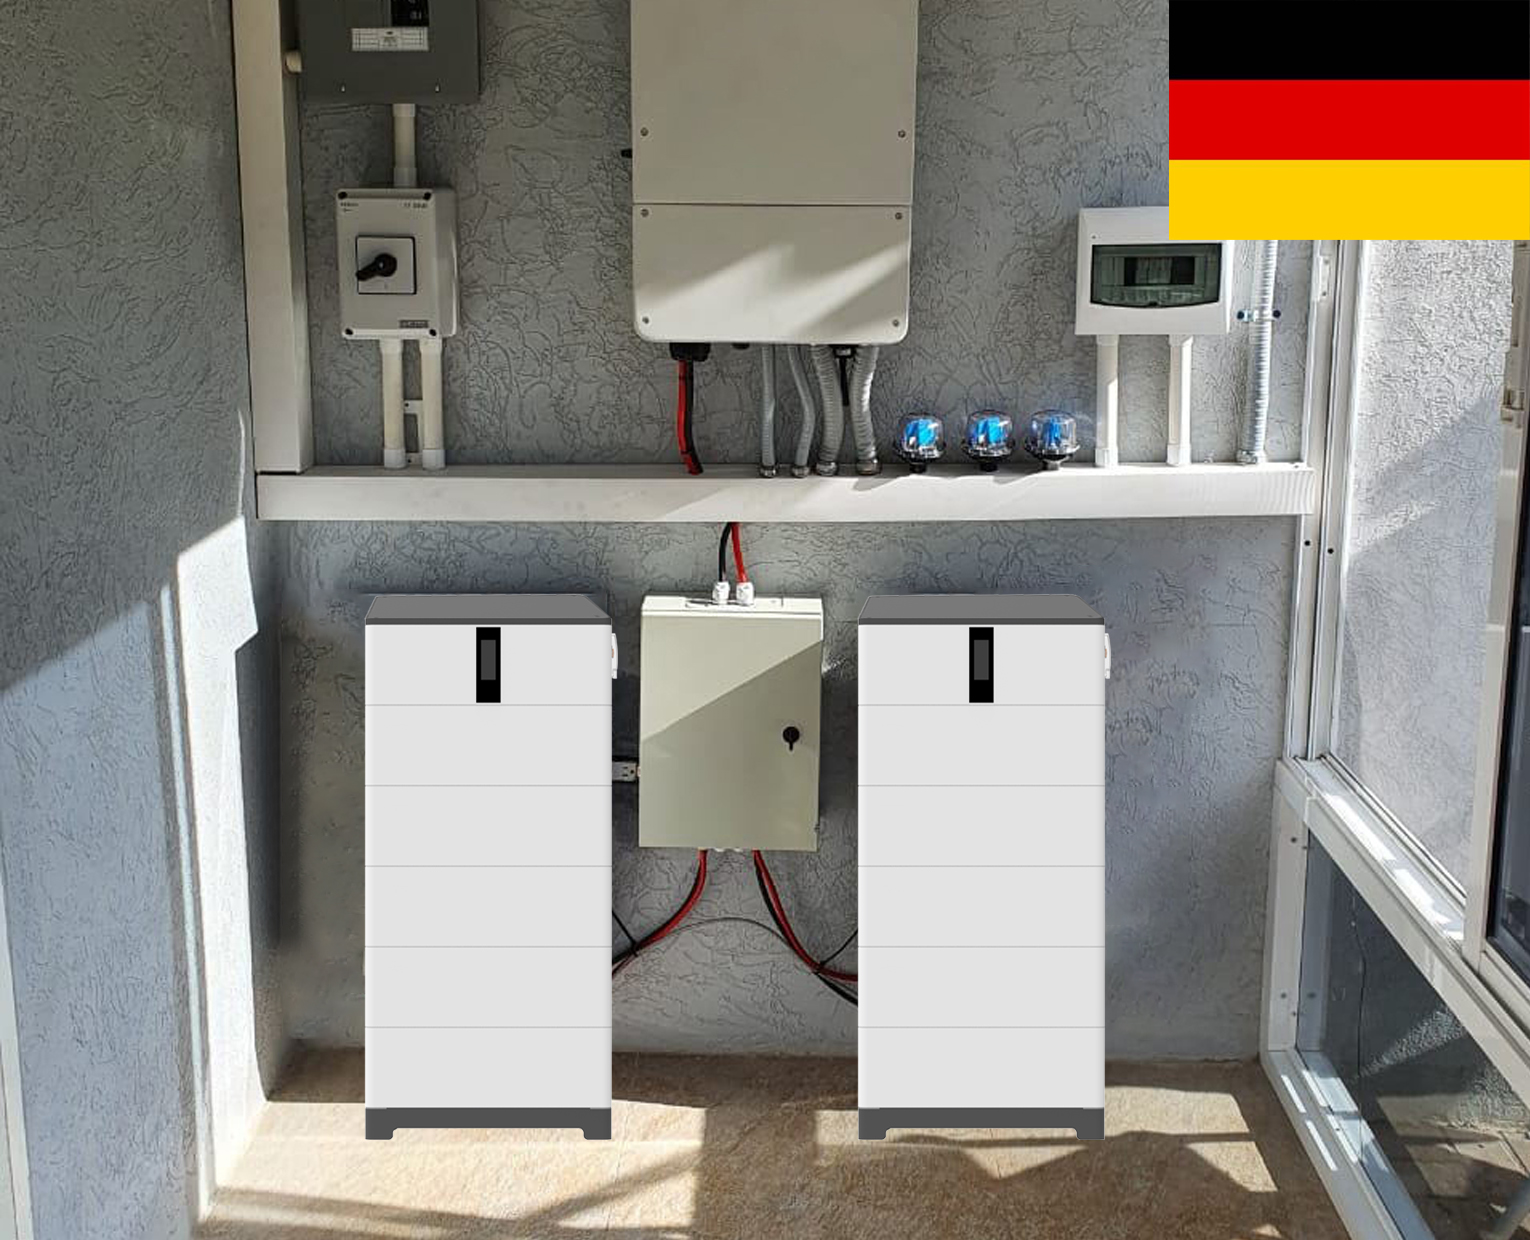 YAJUN's High-Voltage Stackable Battery System Success in Saarbrücken, Germany